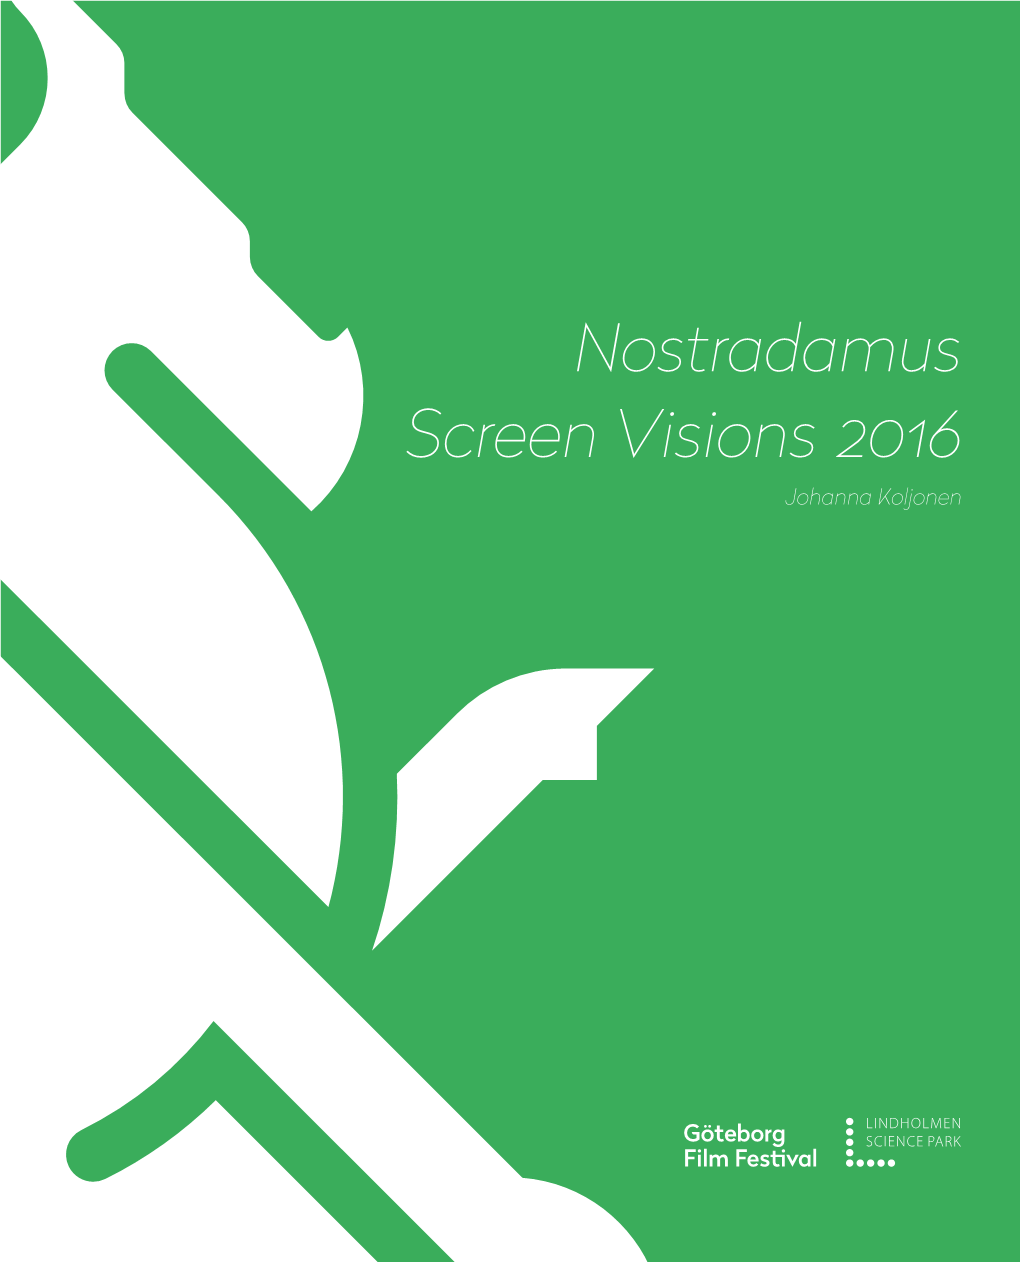 Nostradamus Screen Visions 2016 Johanna Koljonen Introduction